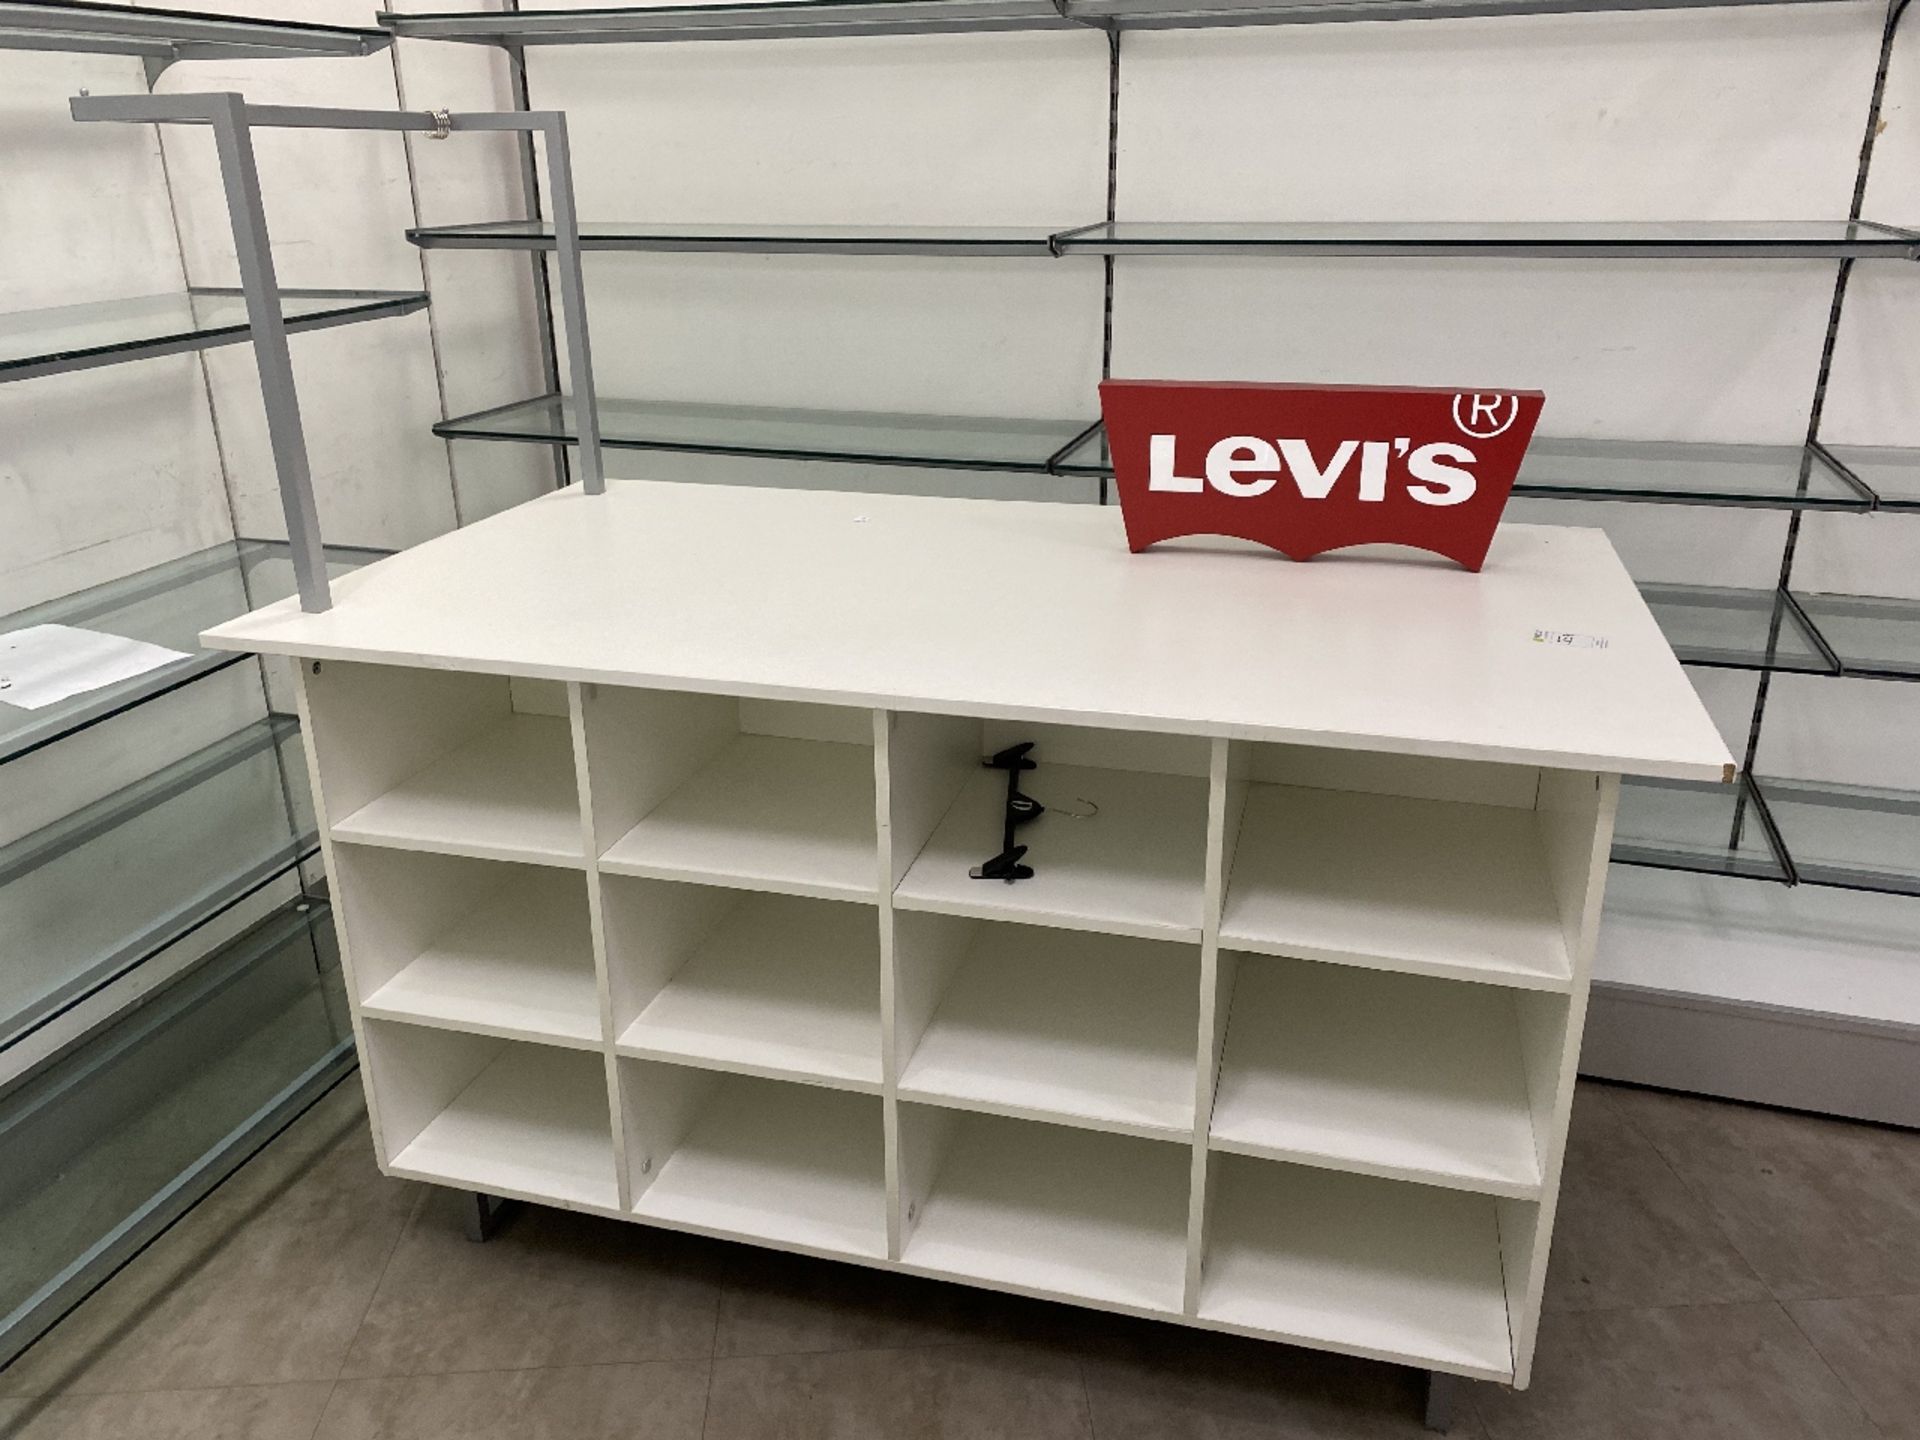 Levi display unit